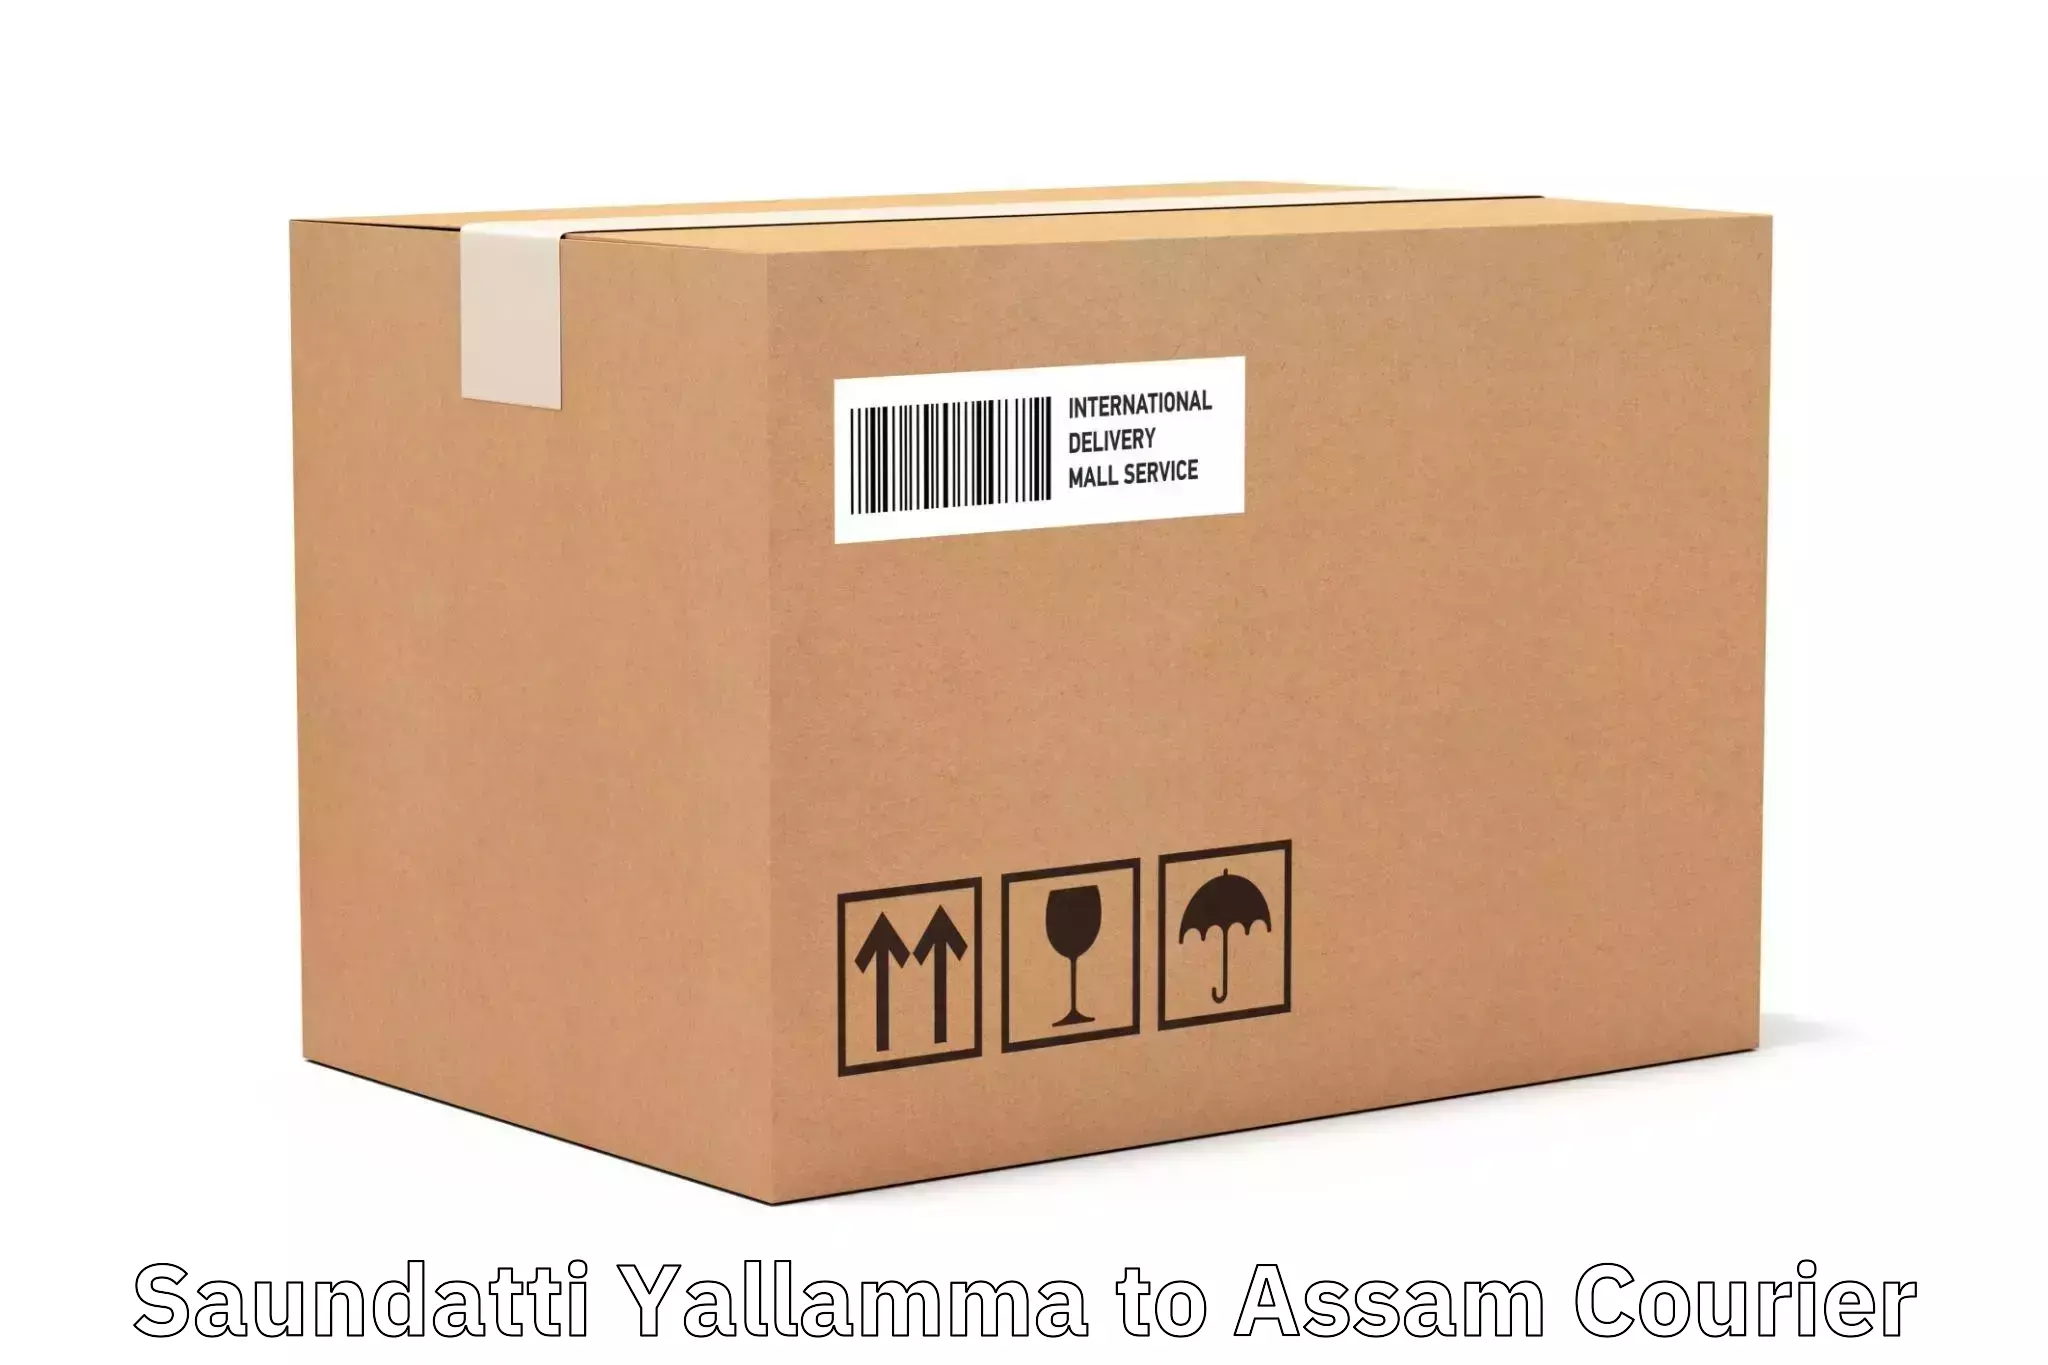 Modern courier technology Saundatti Yallamma to Assam